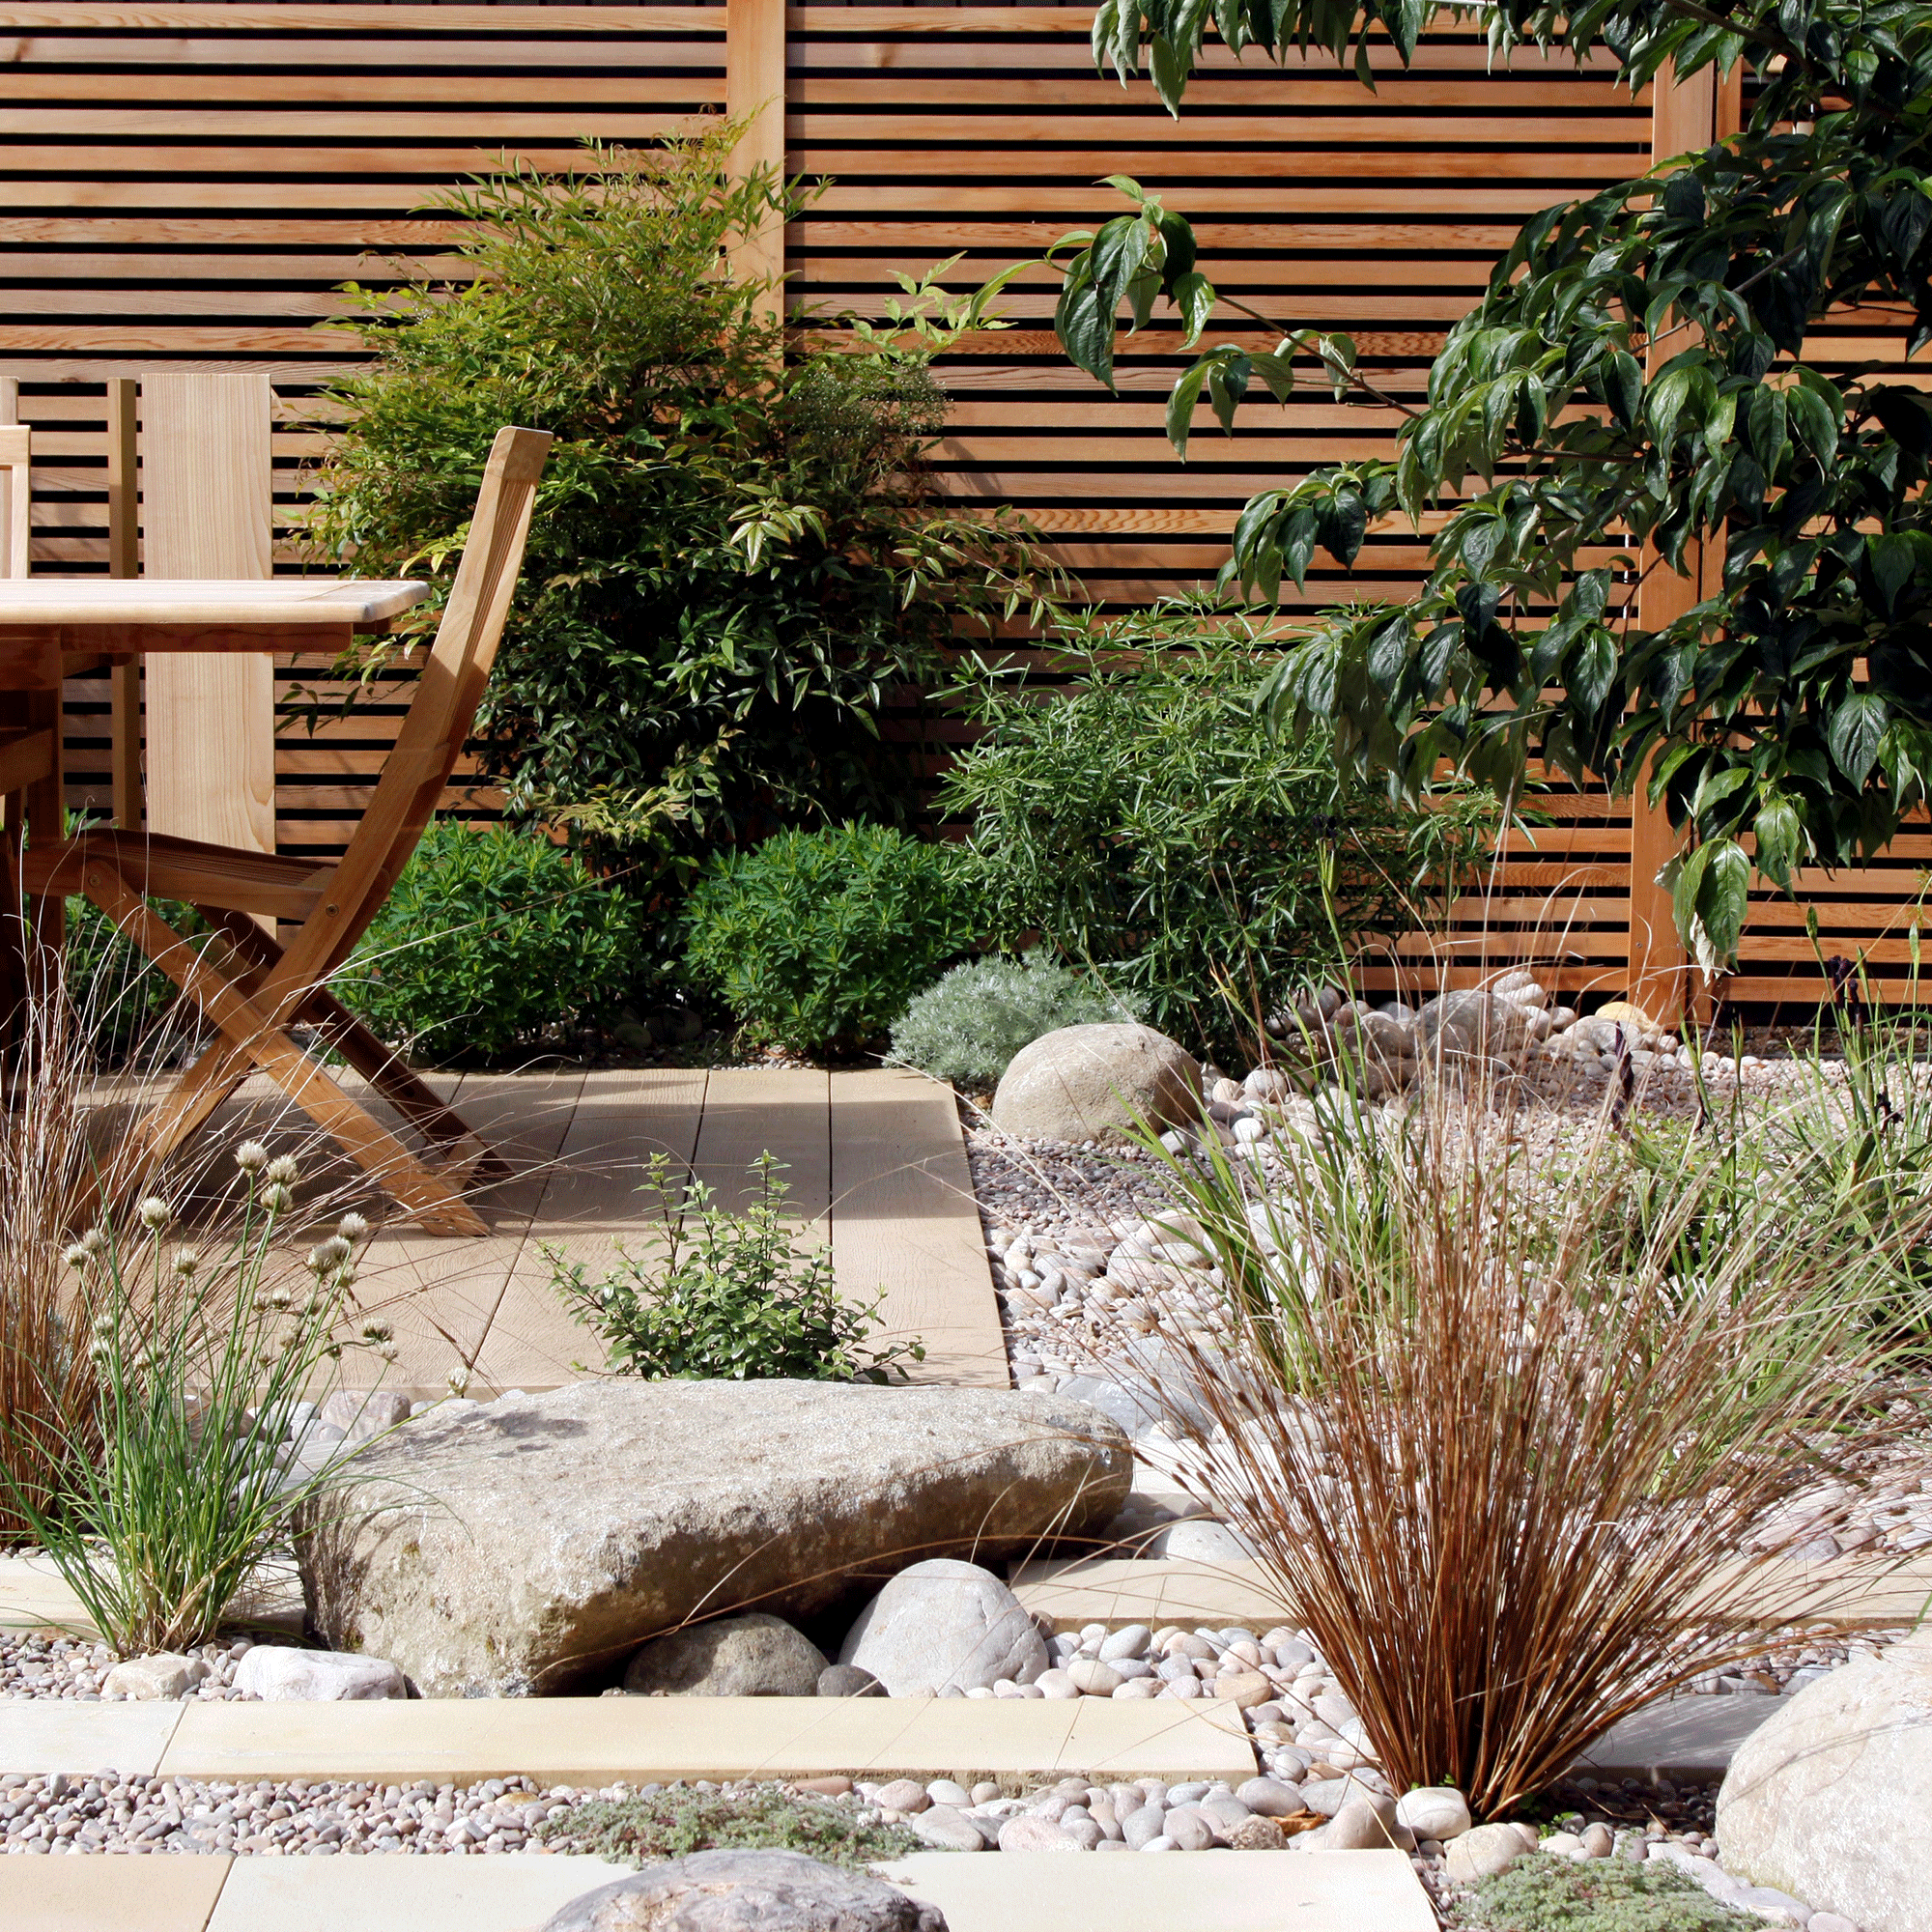 Rock garden with wooden furniture